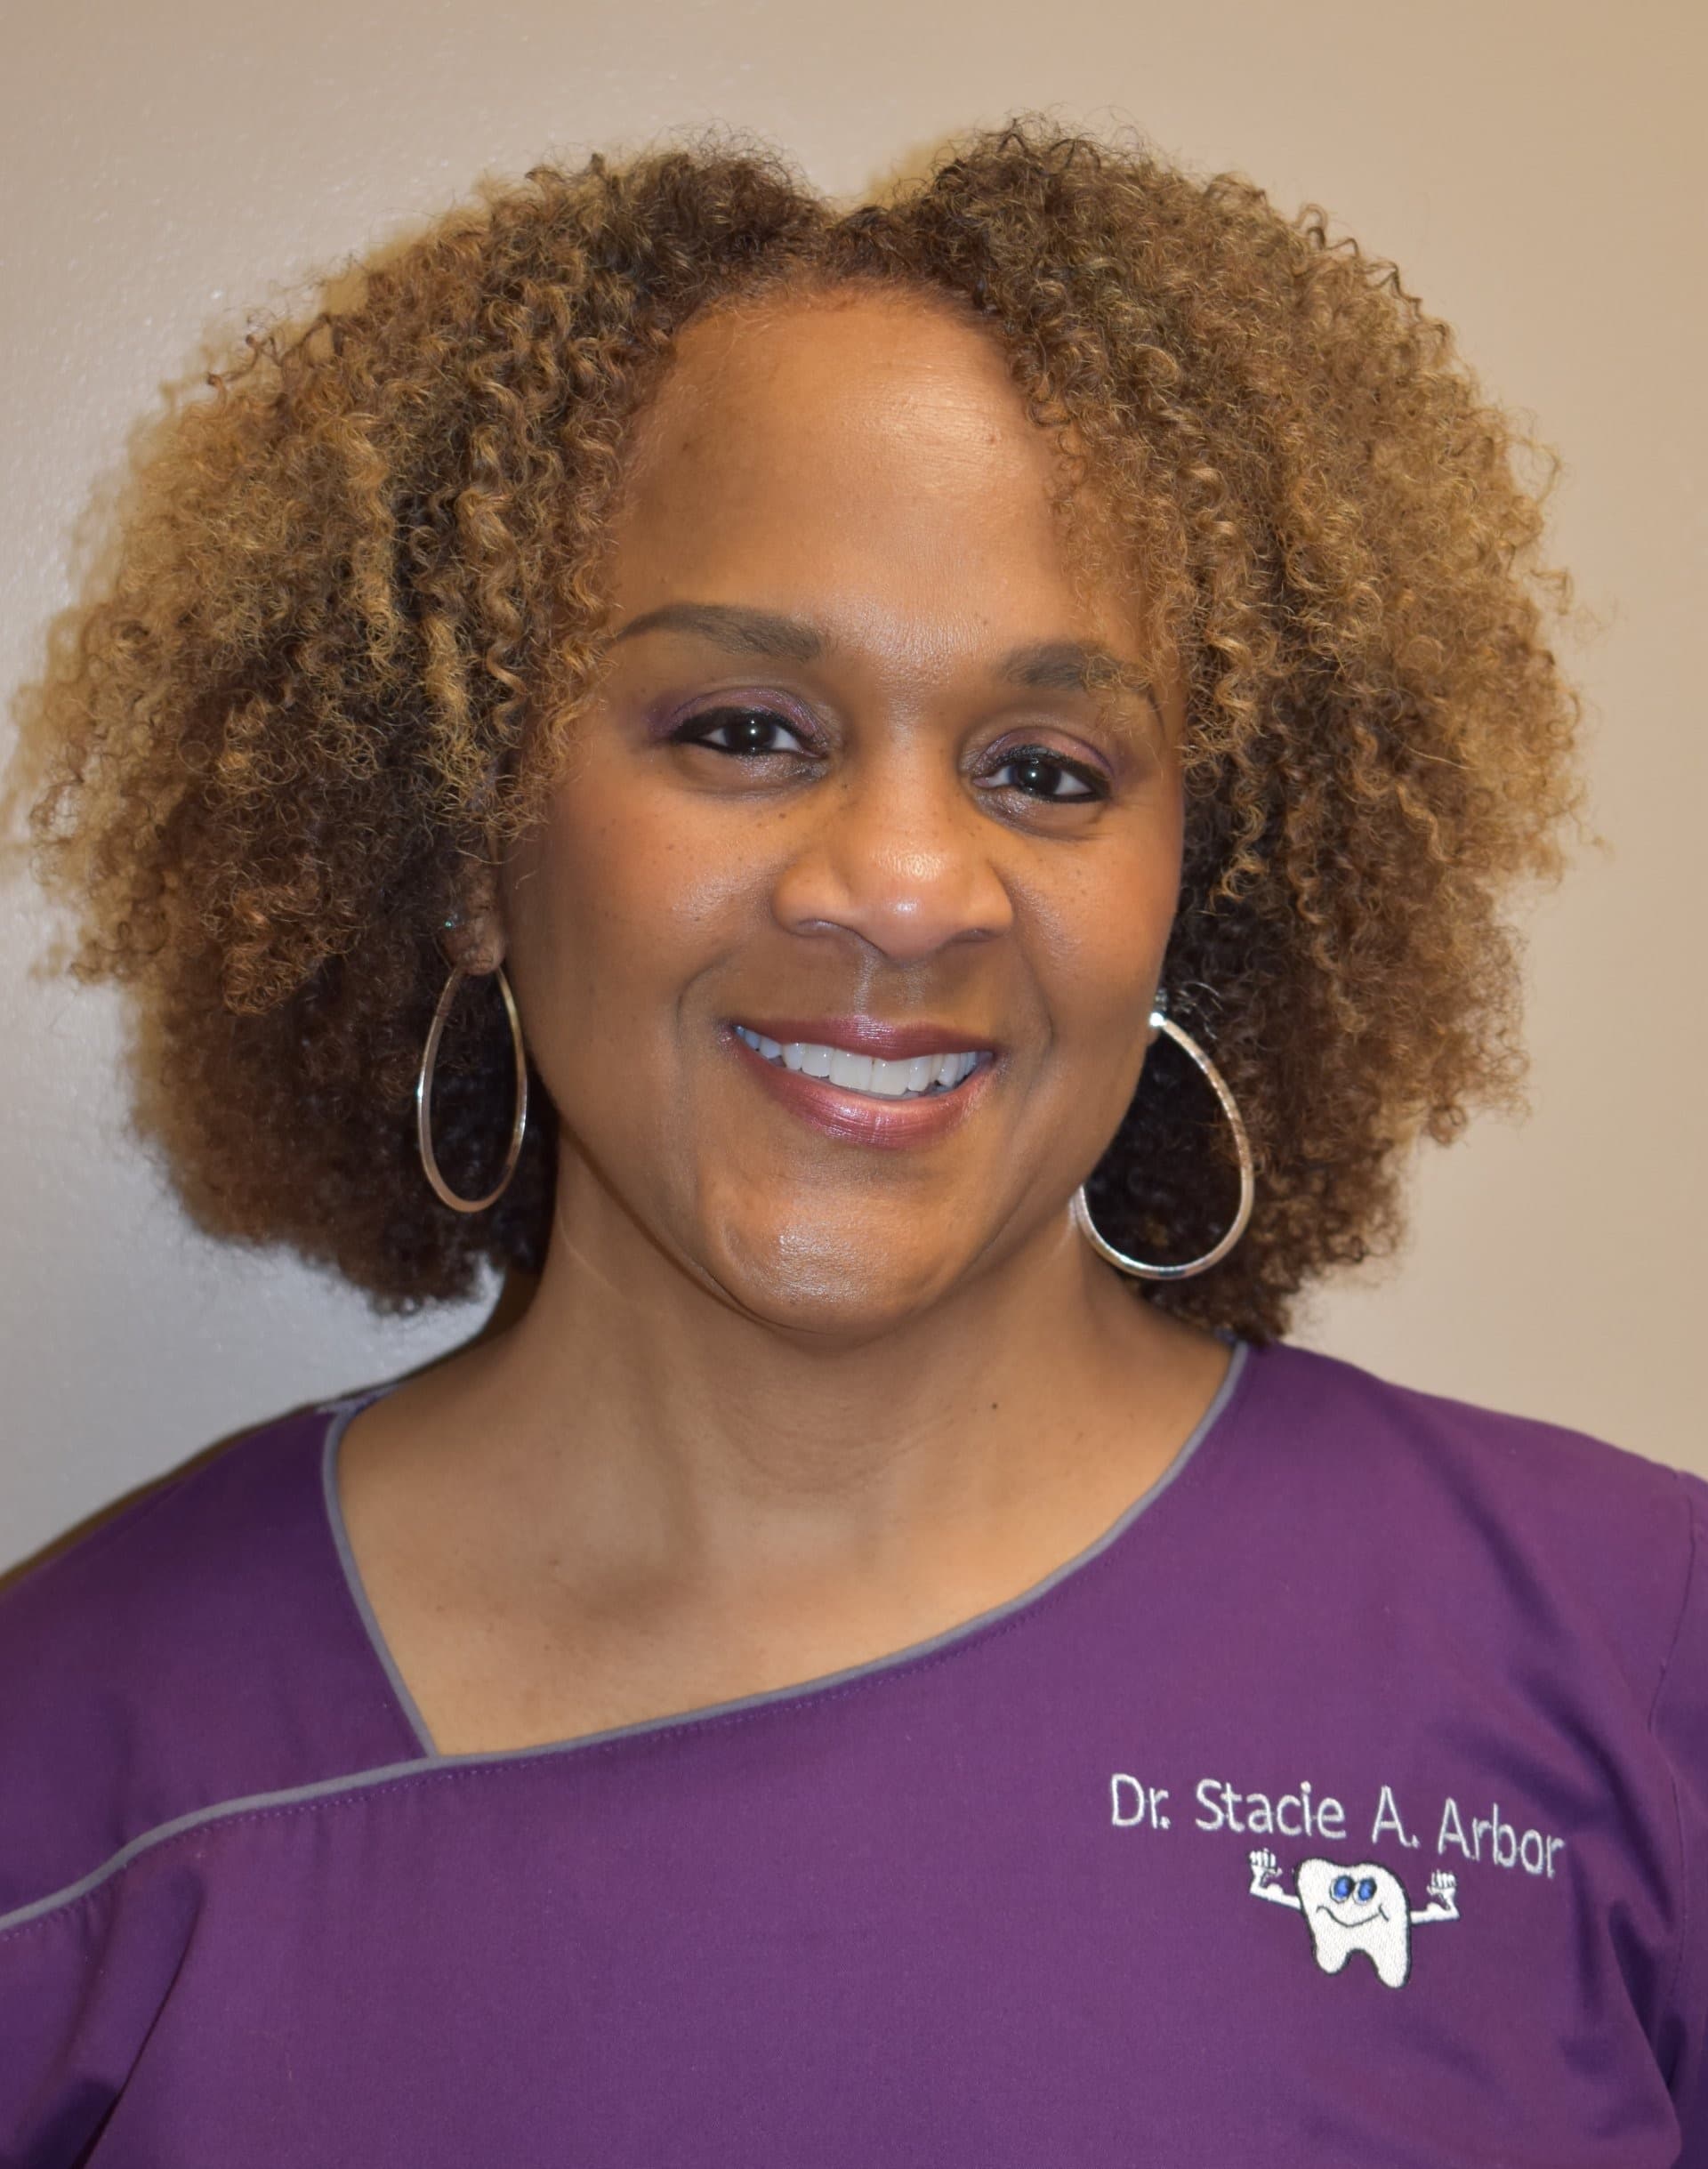 Dr. Stacie Arbor dentist at Dynamic Dental Smiles in Midtown Memphis